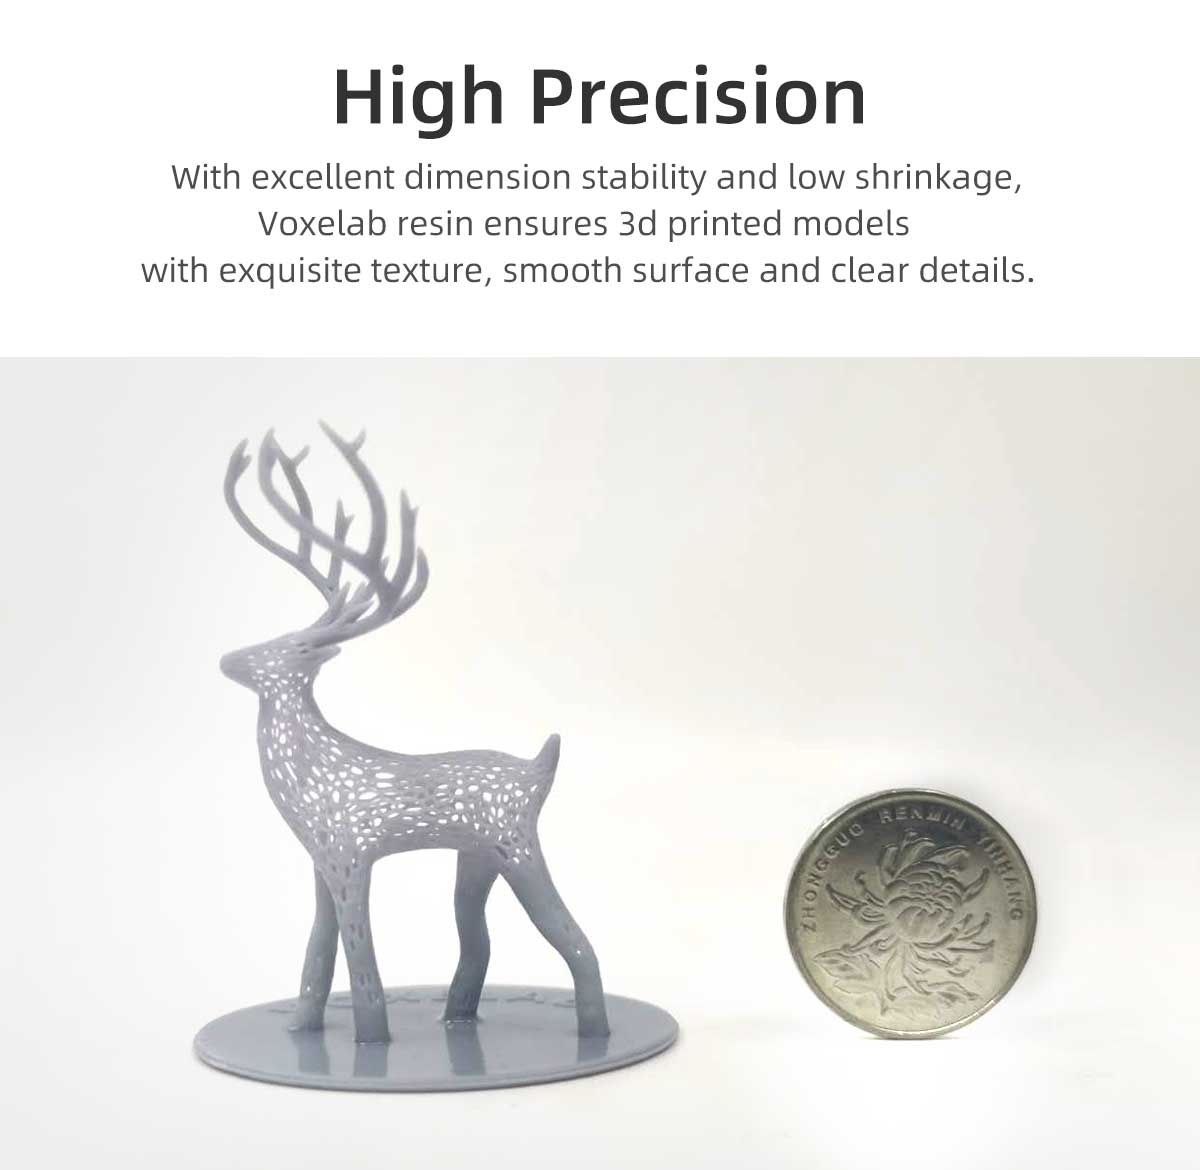 resin for high precision 3d print | Voxelab